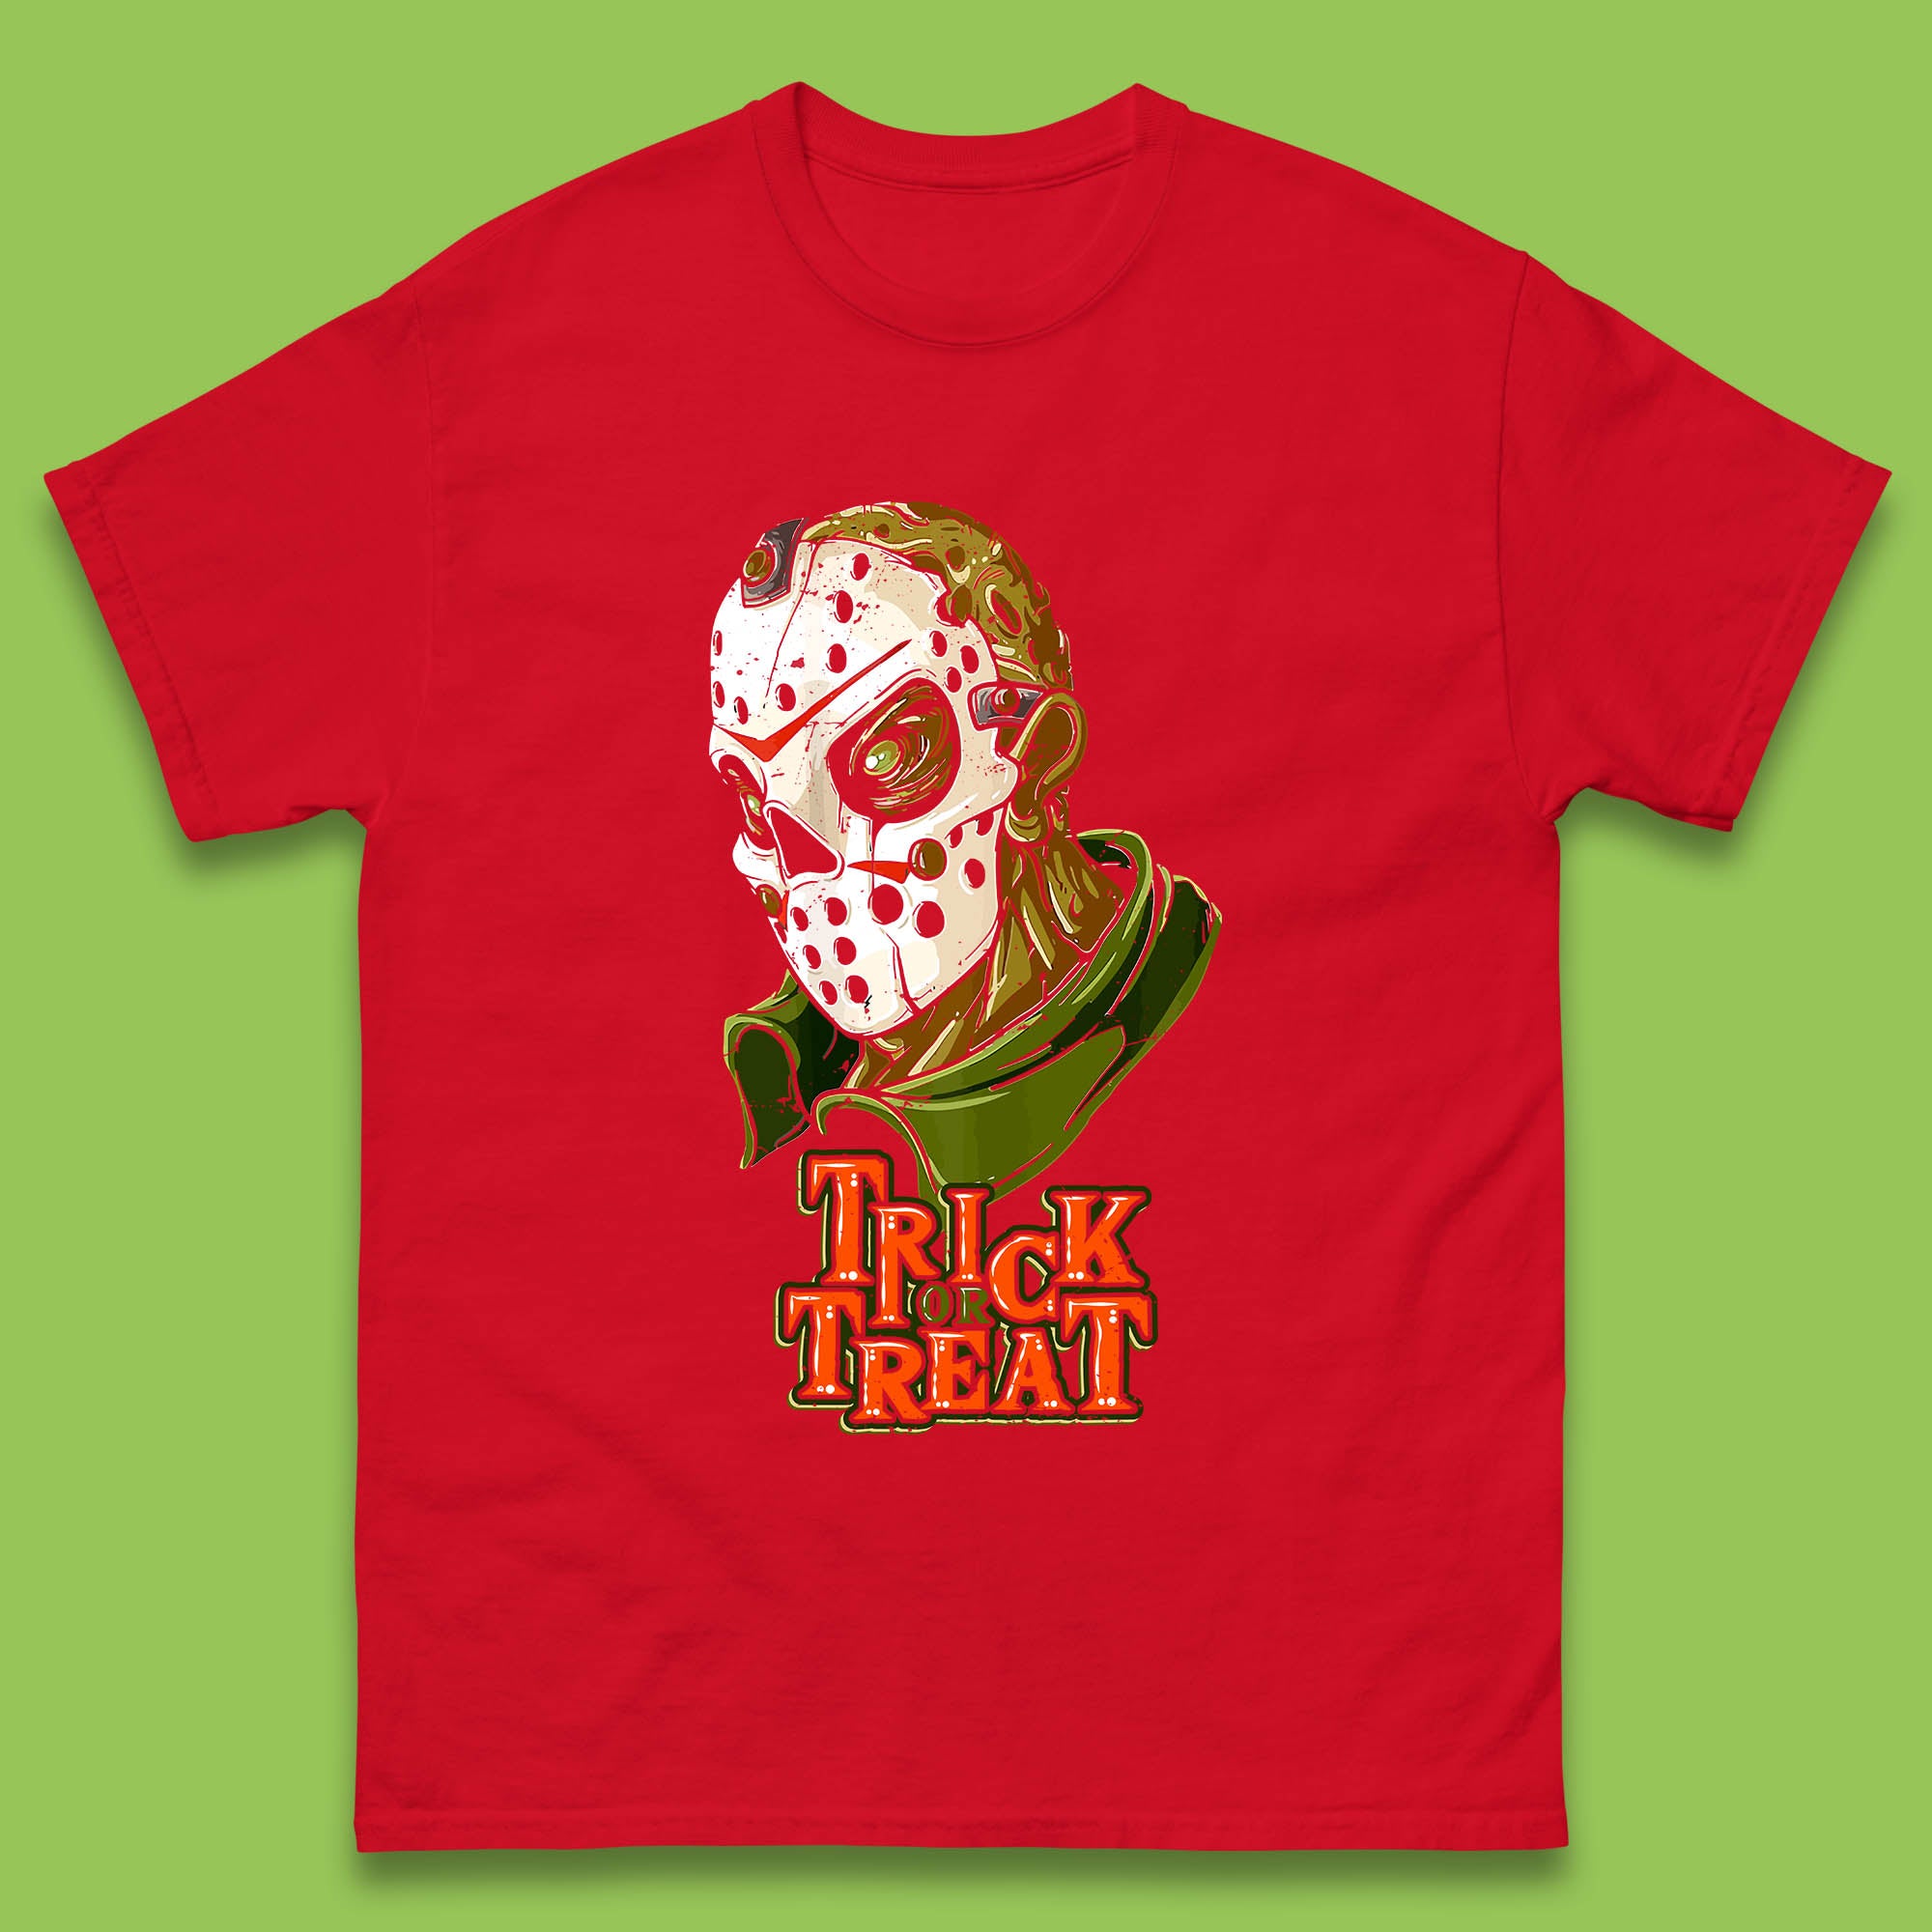 Halloween Trick Or Treat Jason Voorhees Face Mask Horror Movie Character Mens Tee Top